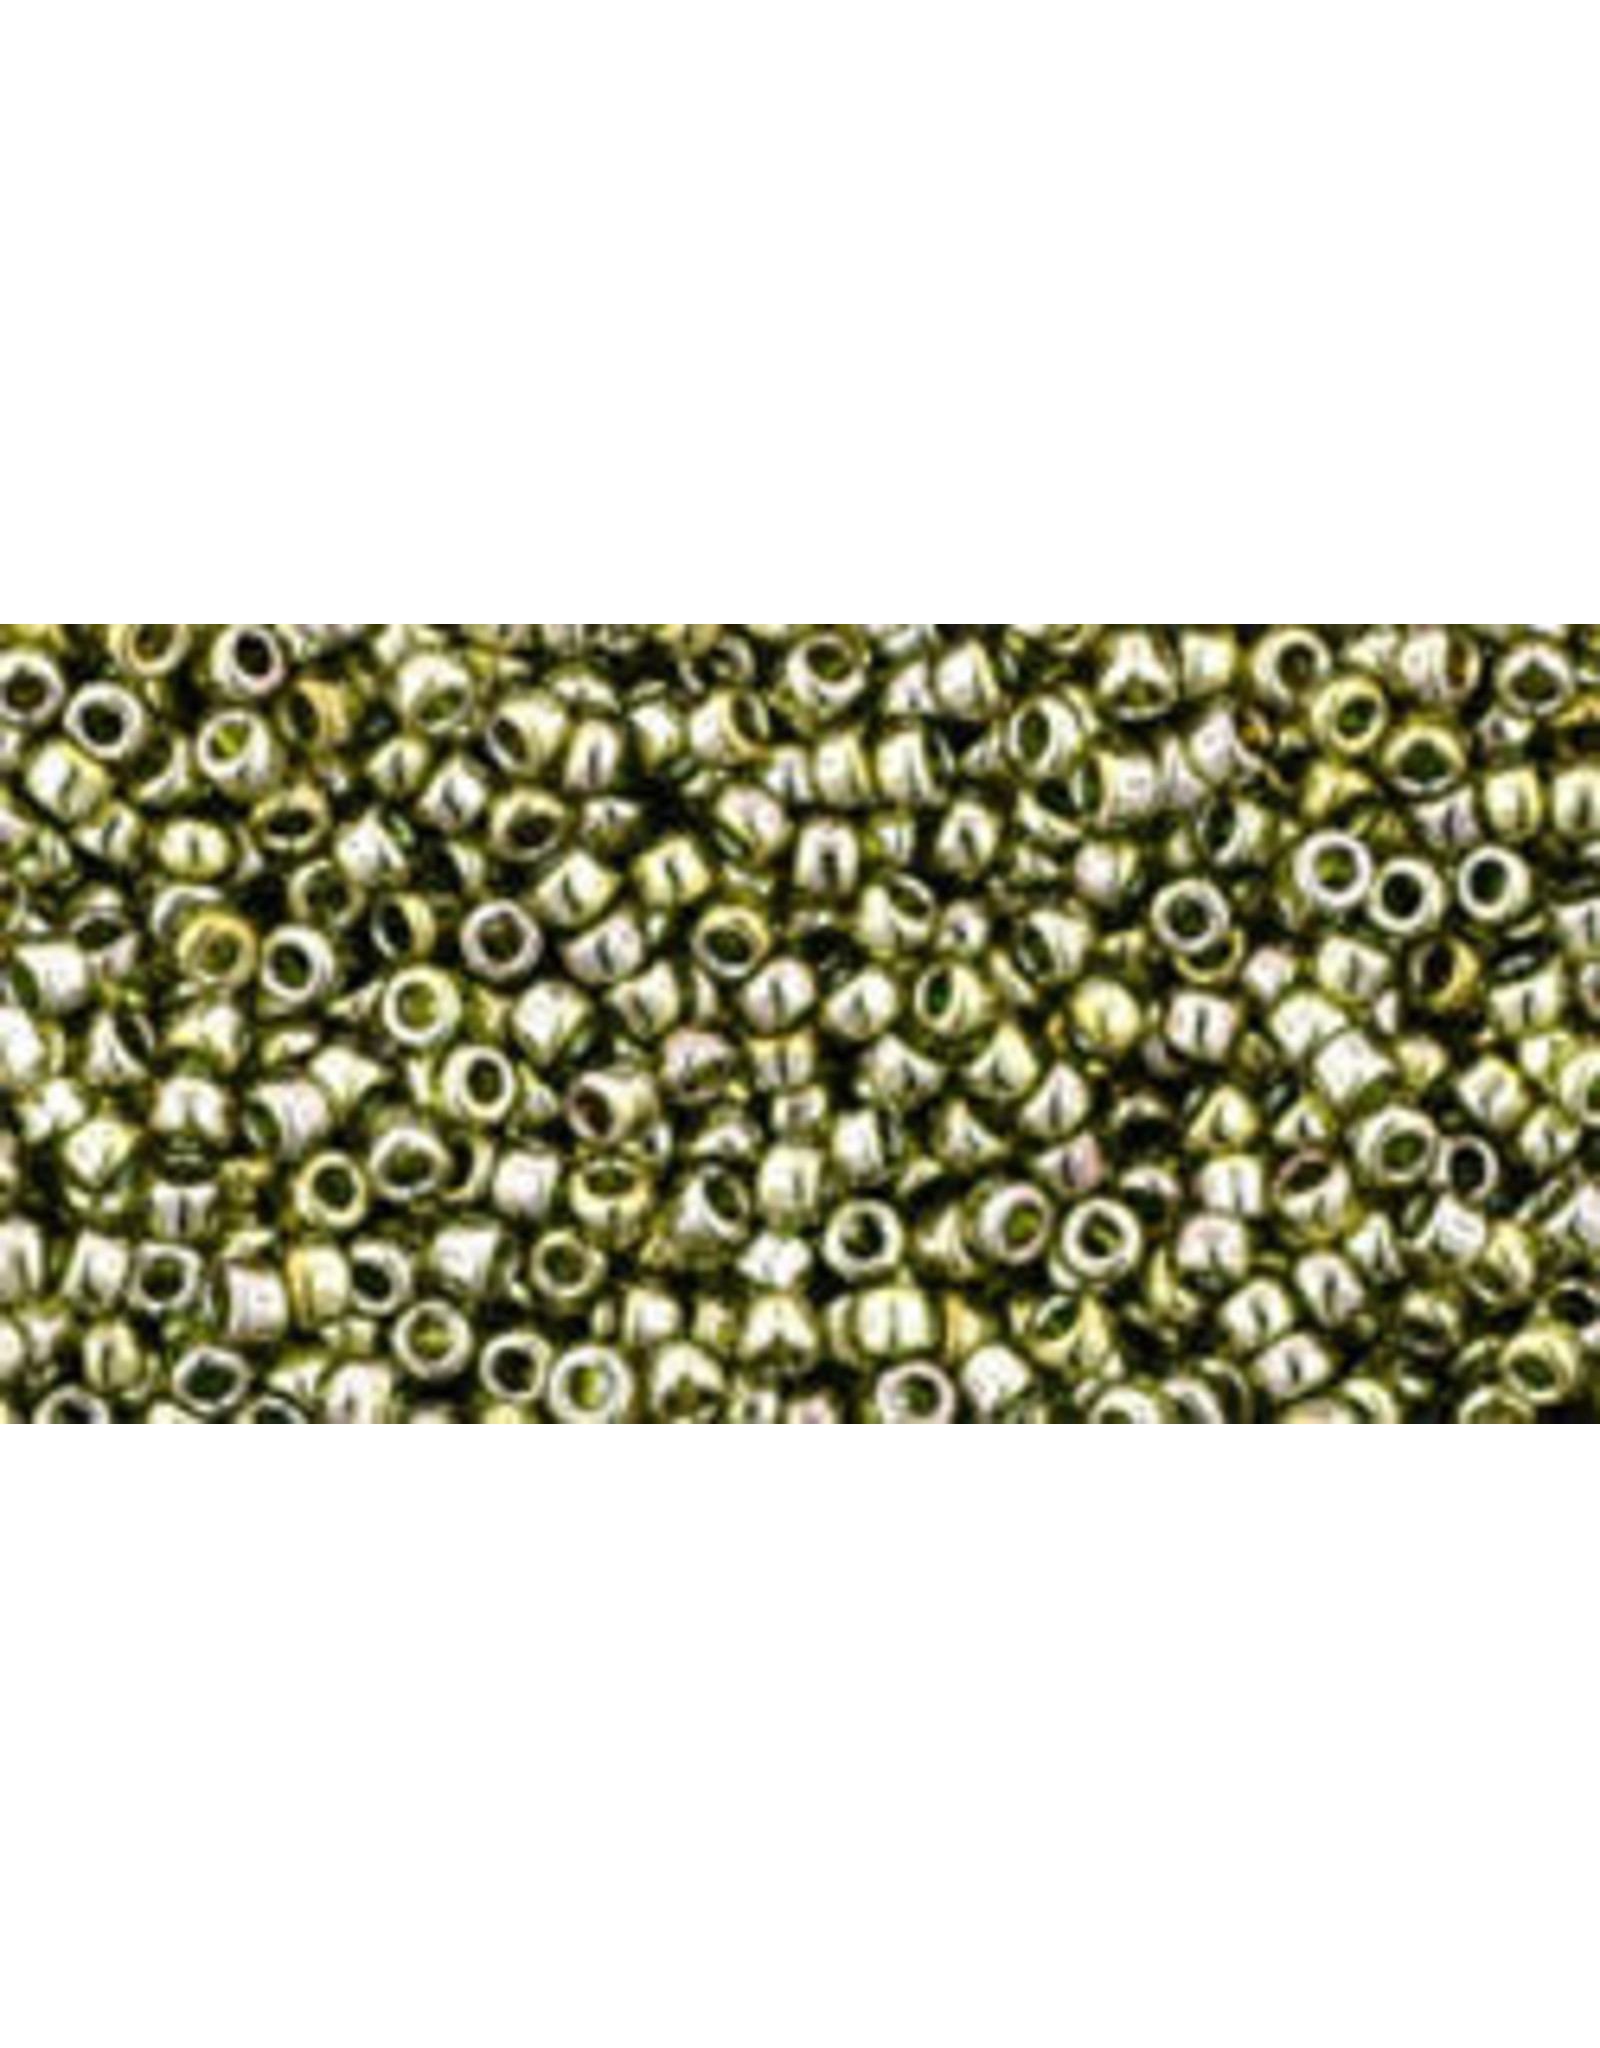 Toho 457 15 Round  5g  Transparent Green Gold Lustre